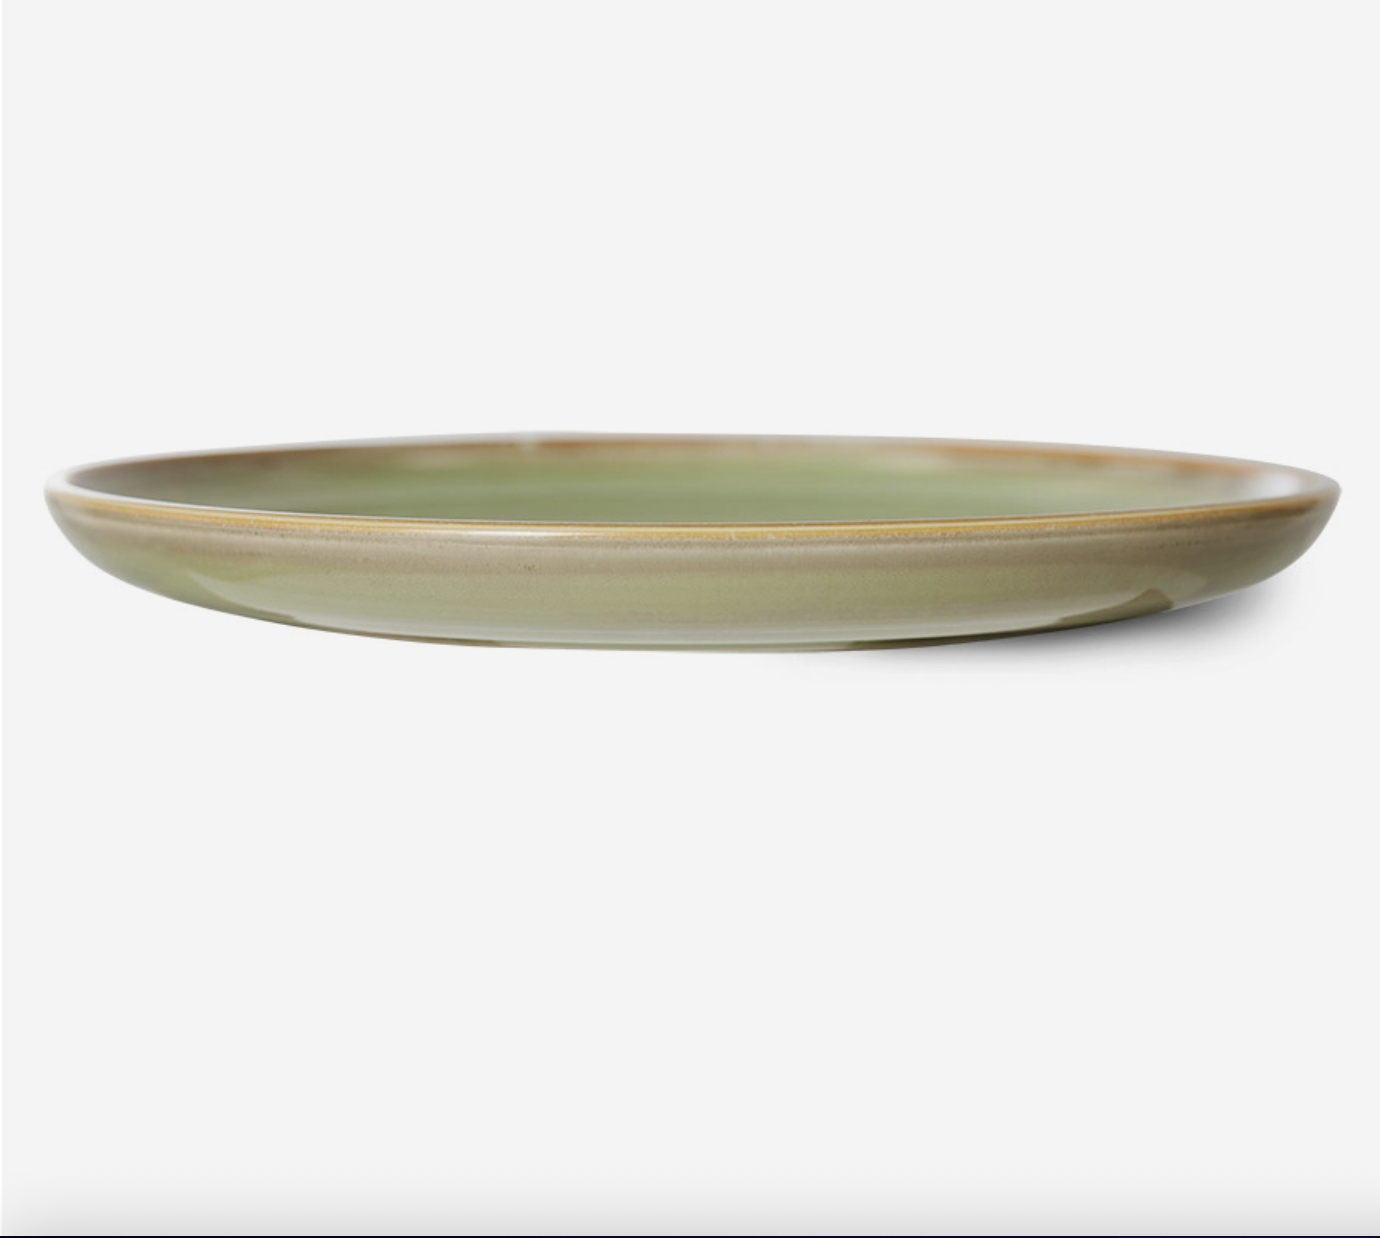 HKLIVING HKLIVING - Chef ceramics dinner plate, moss green ace7147